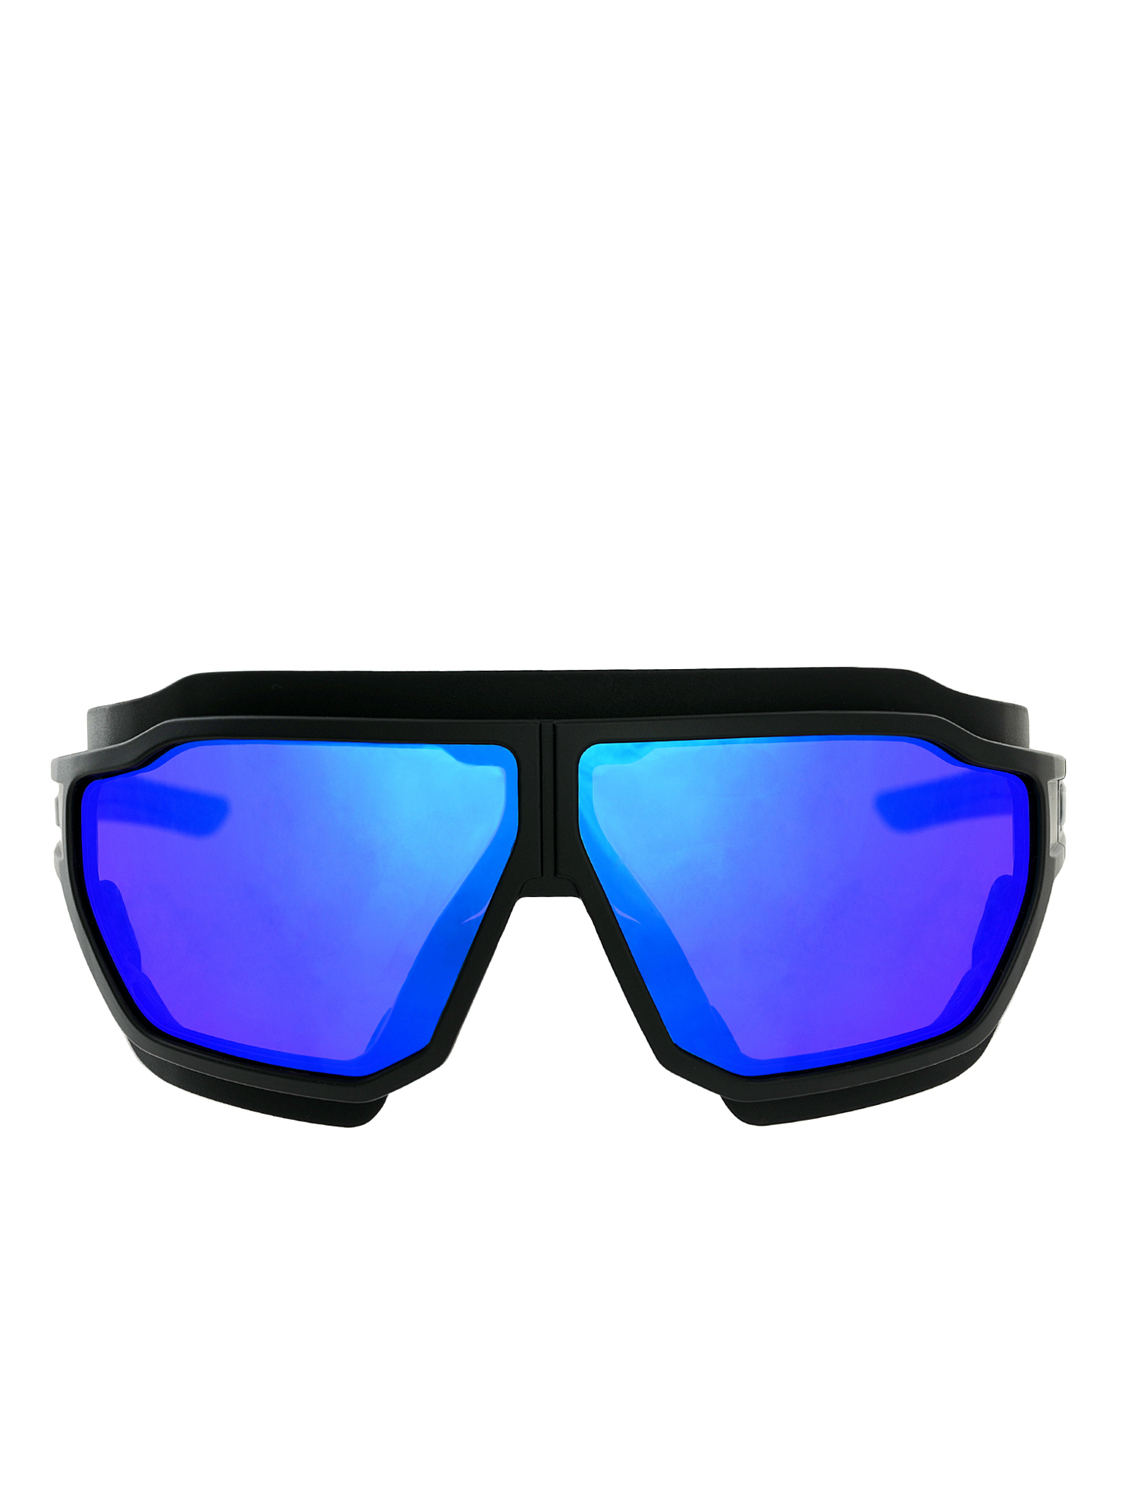 Очки солнцезащитные Salice 024RW Black/Rw Blue